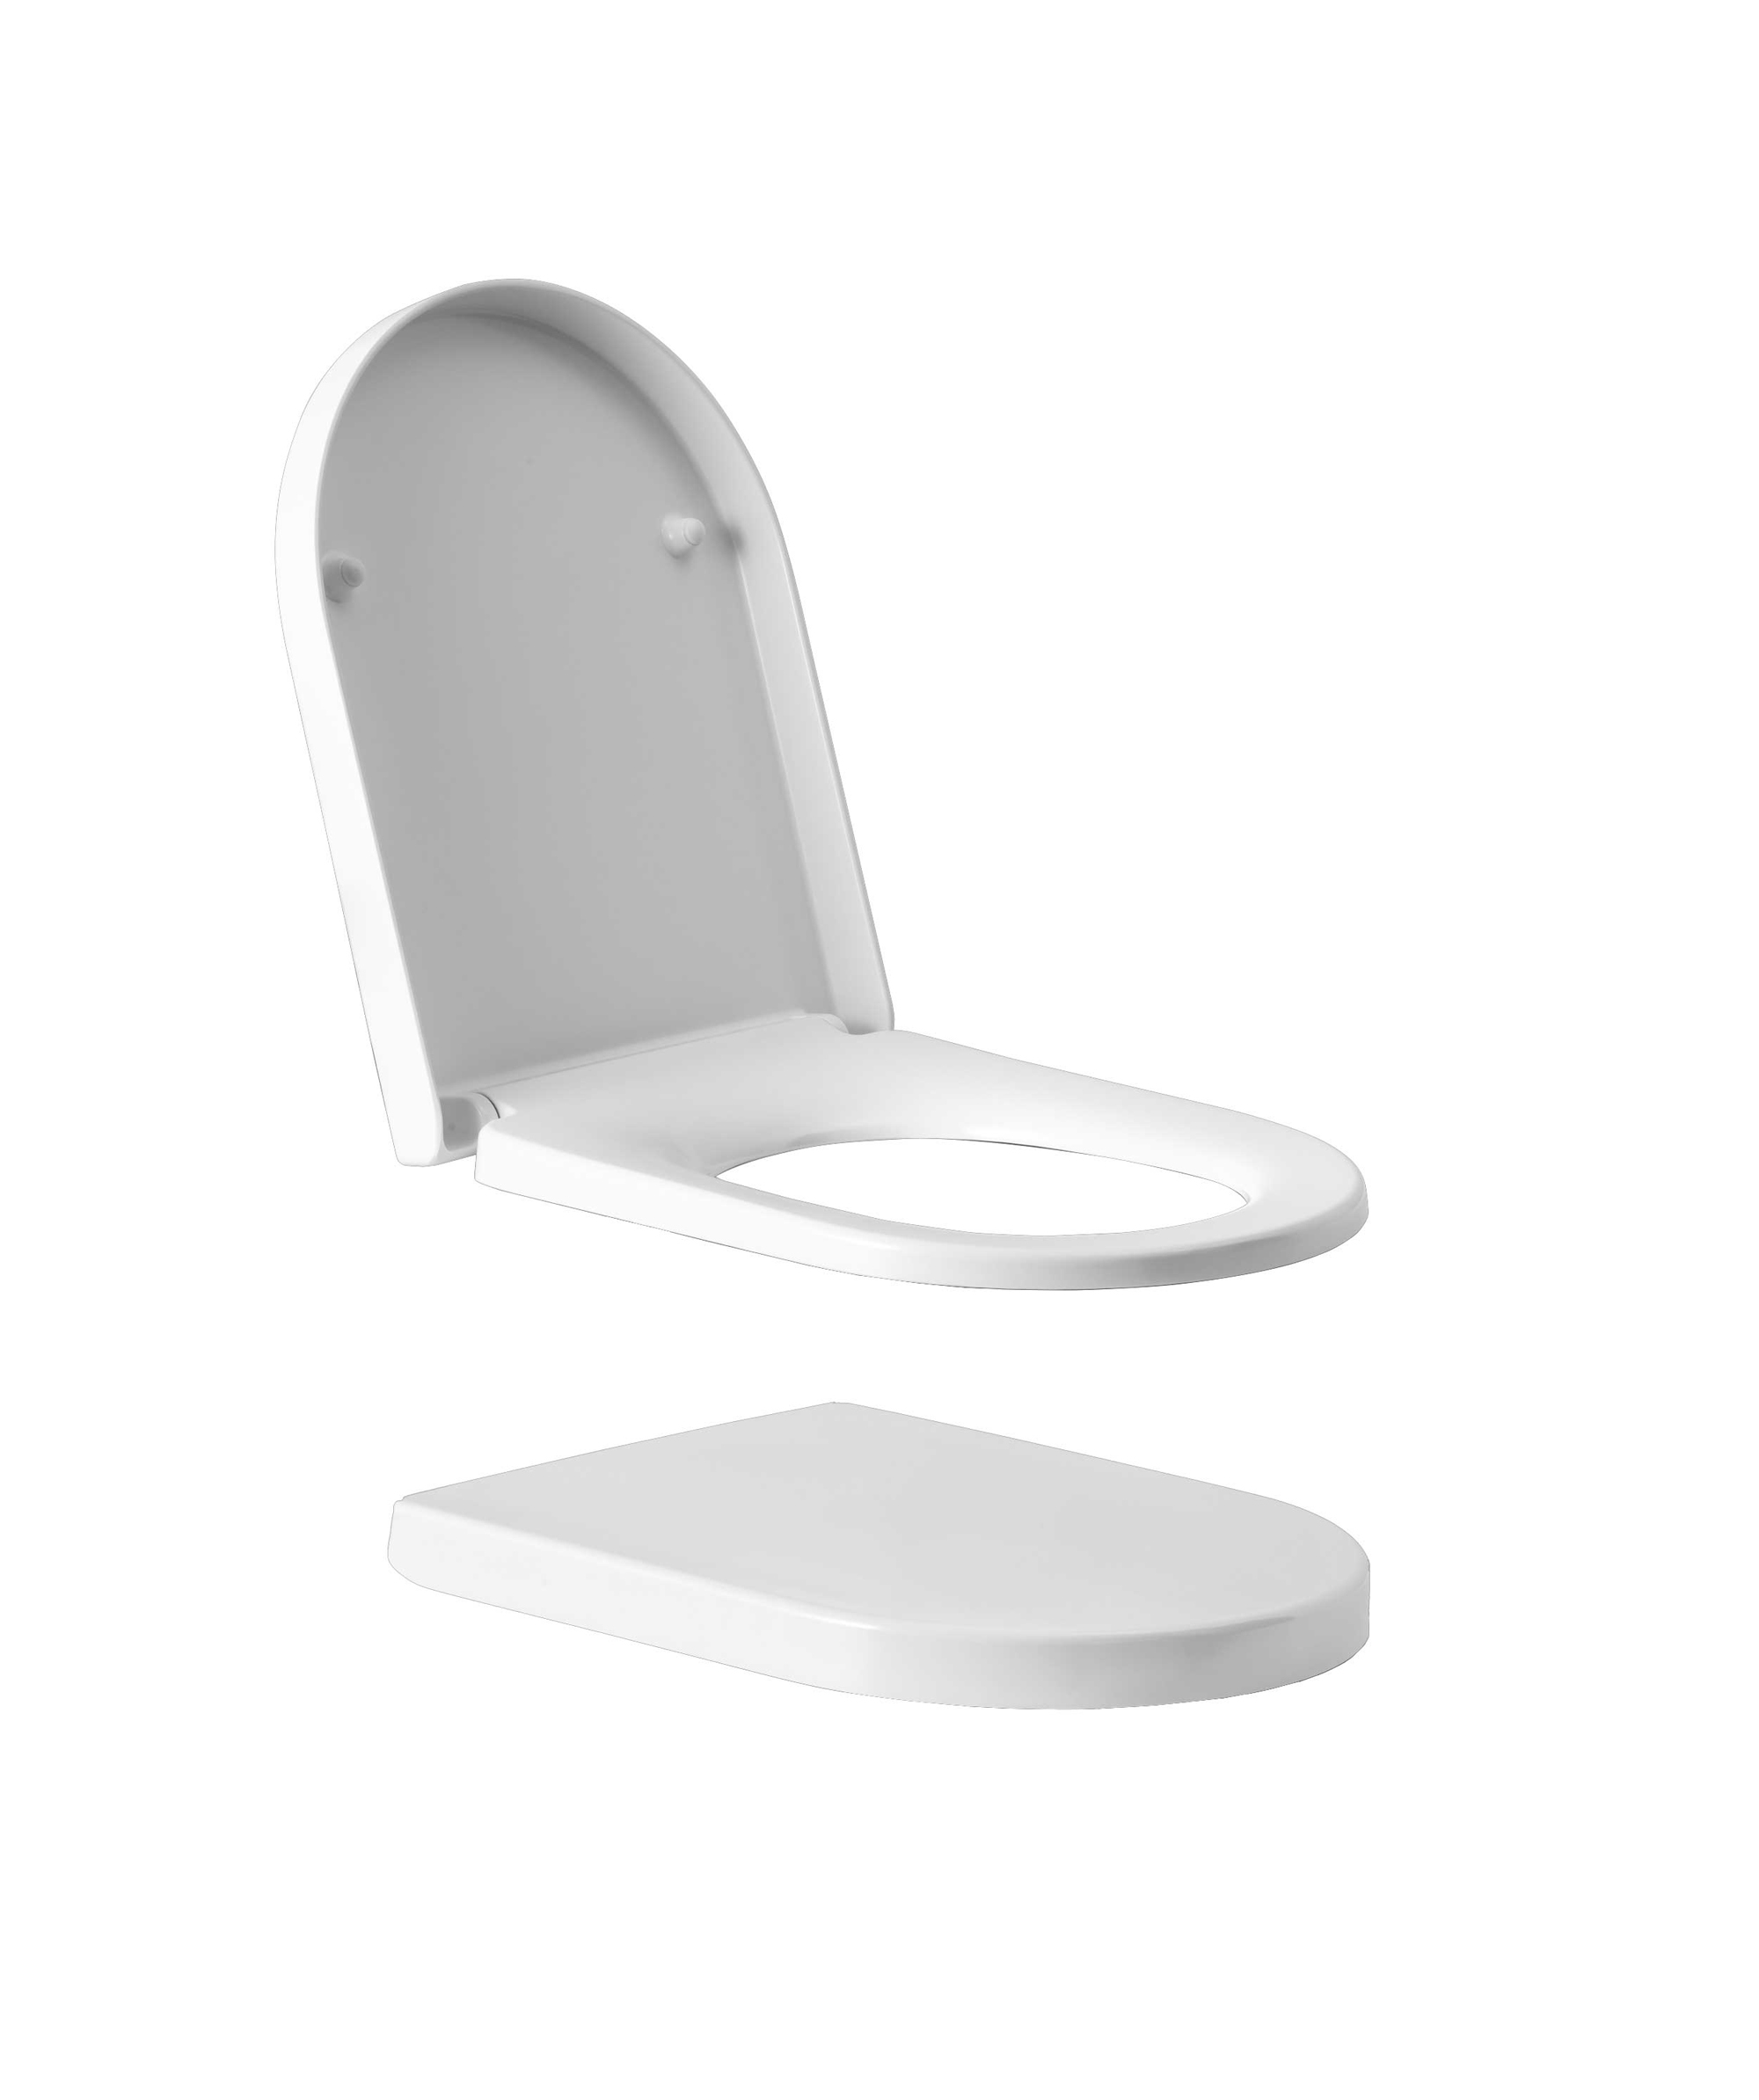 Deluxe toilet seat - 40mm lid profile